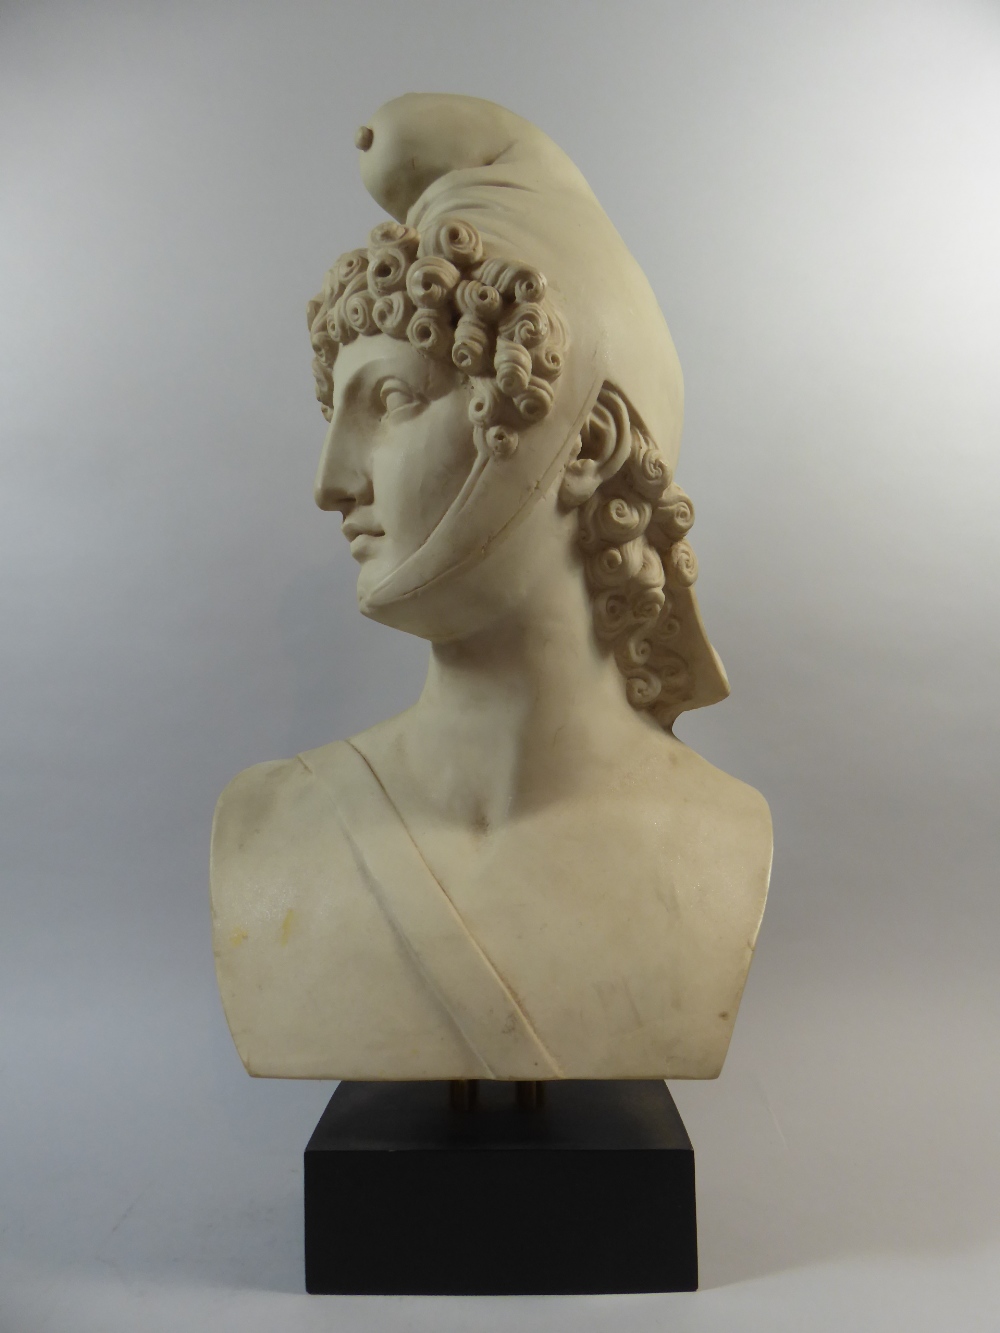 A Museum Replica of a Greek Hero Bust.